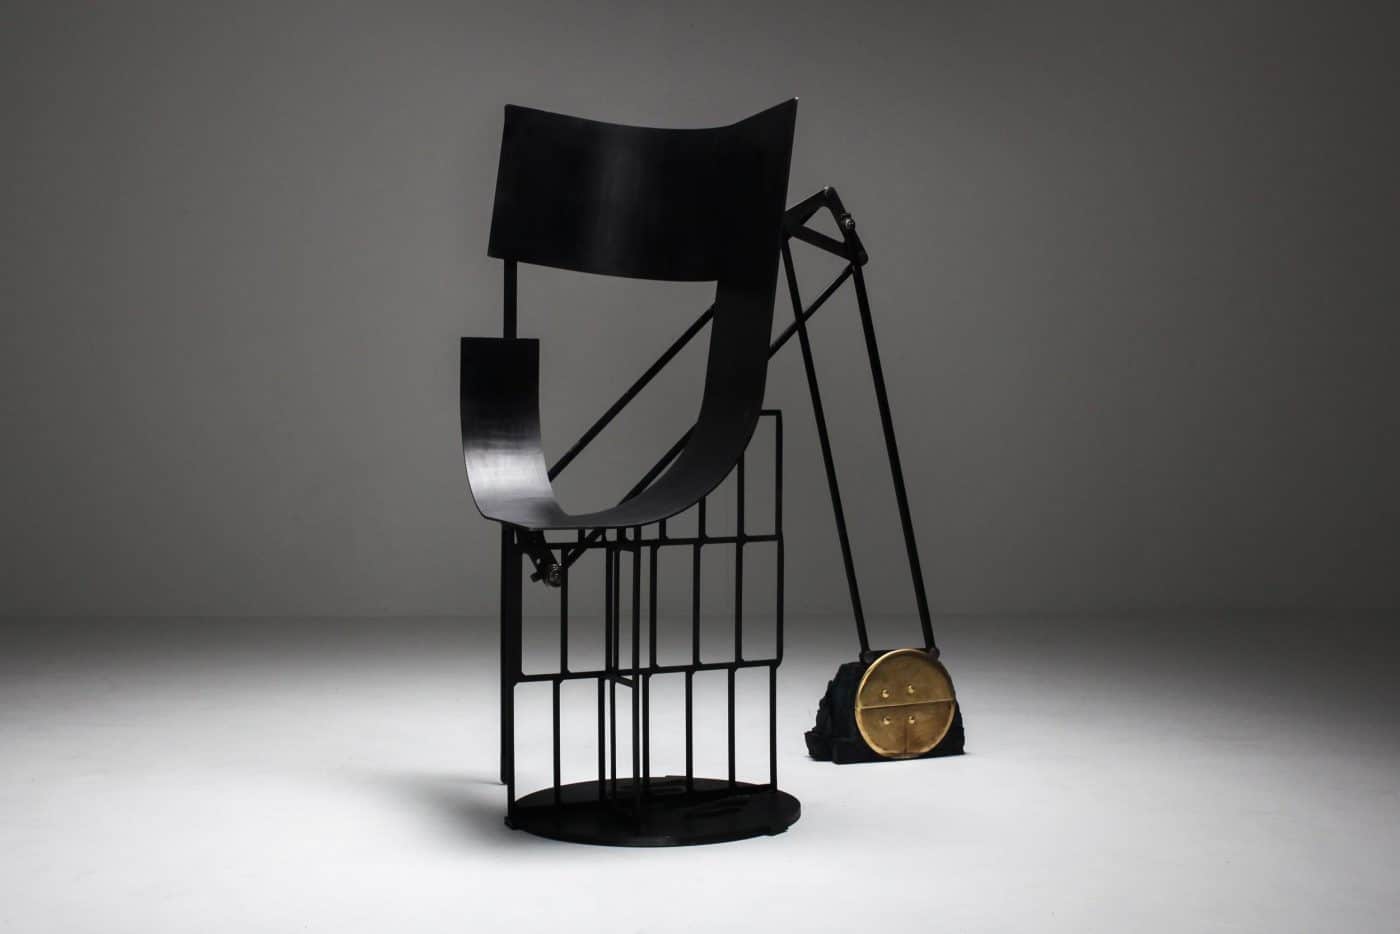 Lionel Jadot: Black Caterpillar chair, 2020